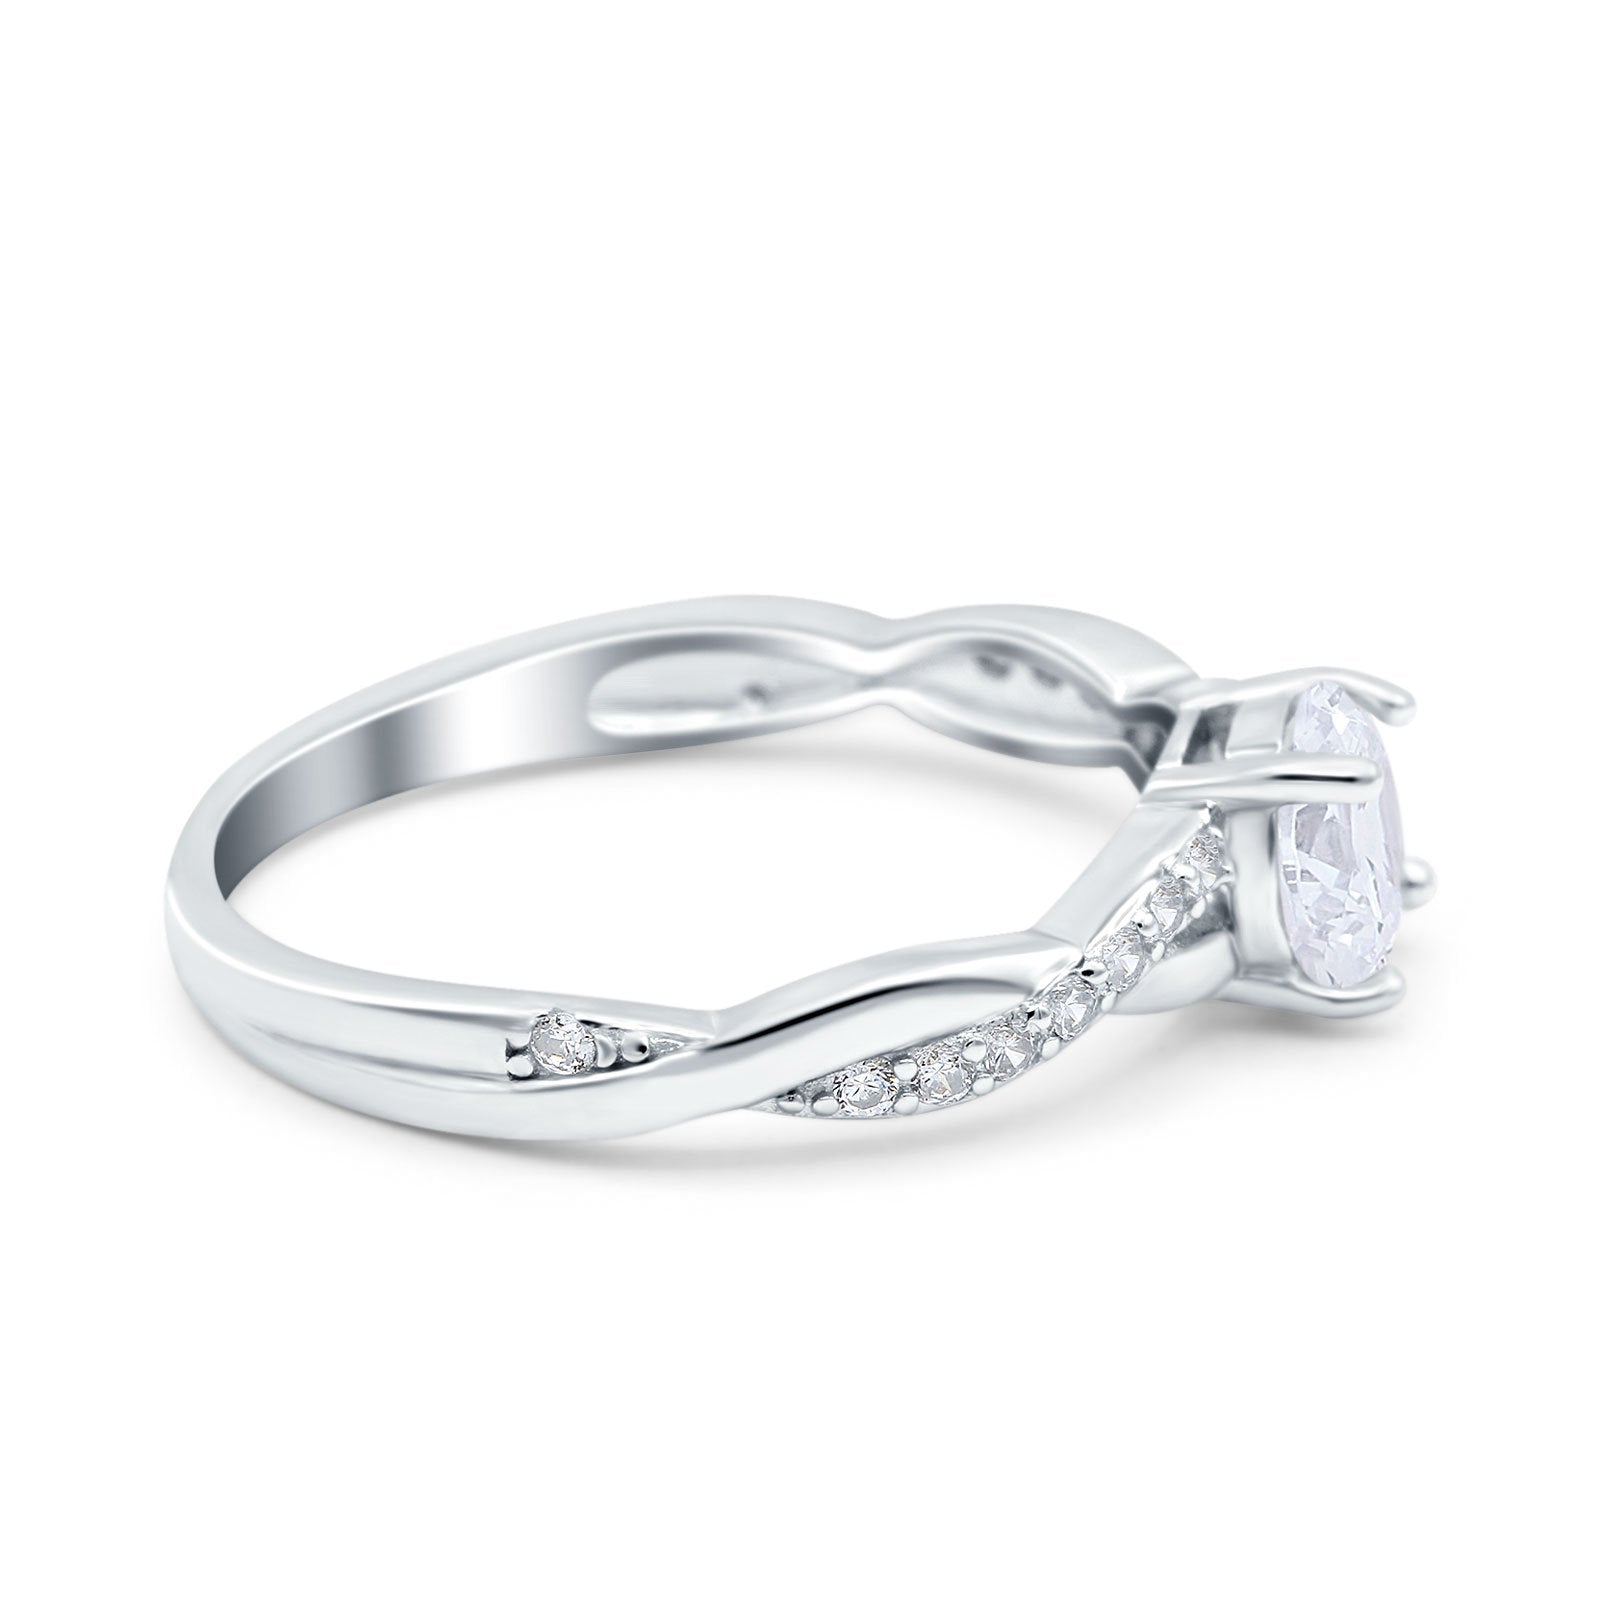 14K Gold Infinity Twist Round Shape Art Deco Simulated Cubic Zirconia Wedding Ring